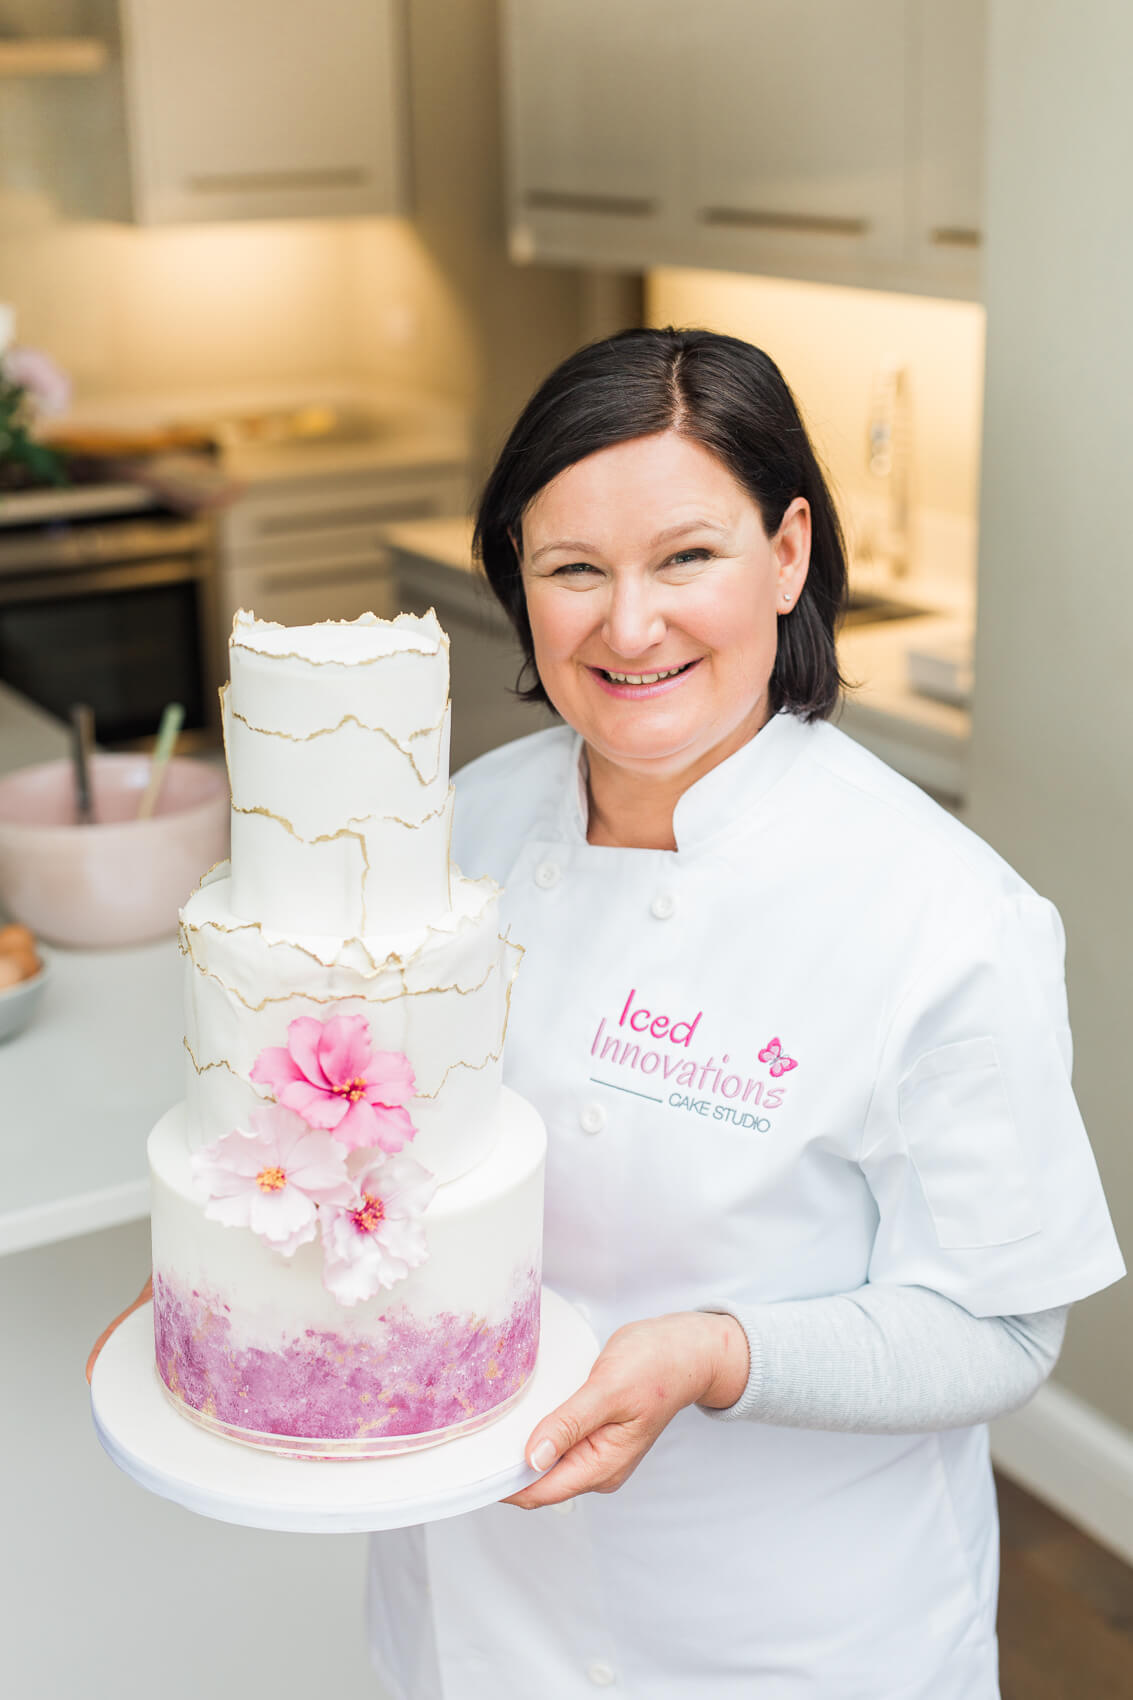 Erica Galvin luxury Wedding Cake designer maker decorator baker creator modern bespoke stylish cakes